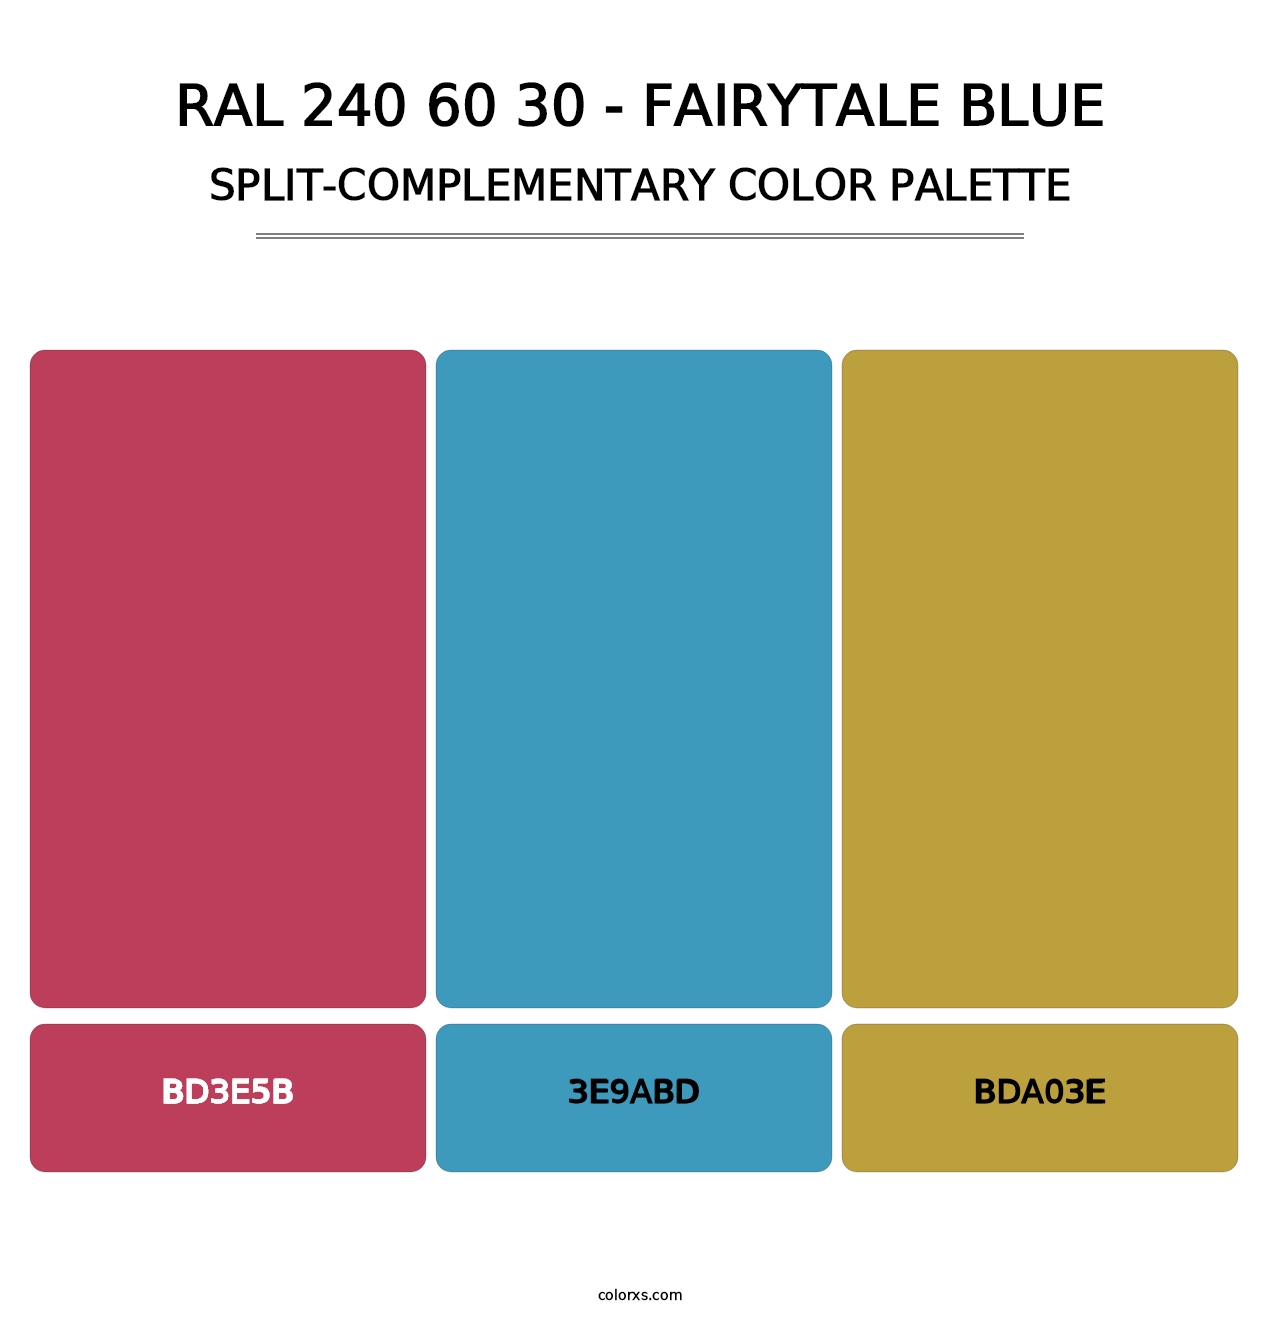 RAL 240 60 30 - Fairytale Blue - Split-Complementary Color Palette